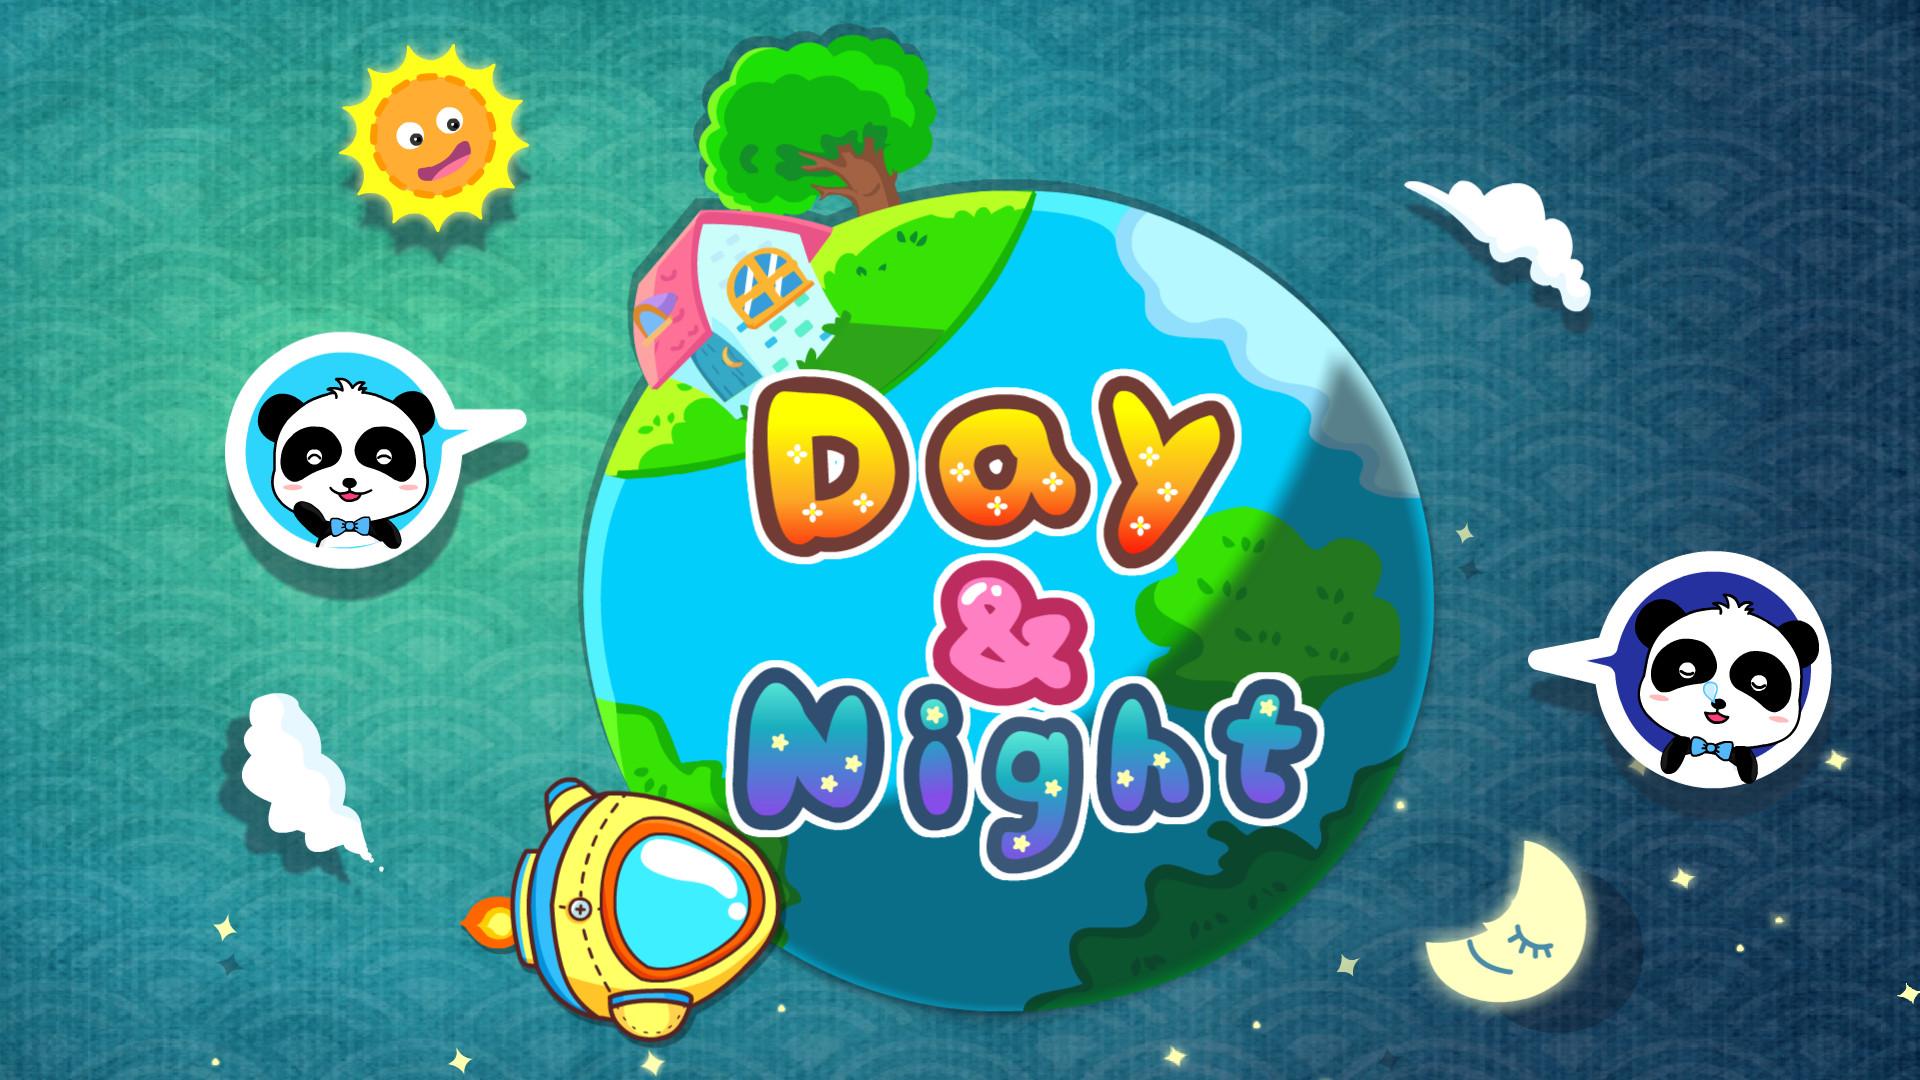 Android application Night and Day - Panda Game screenshort